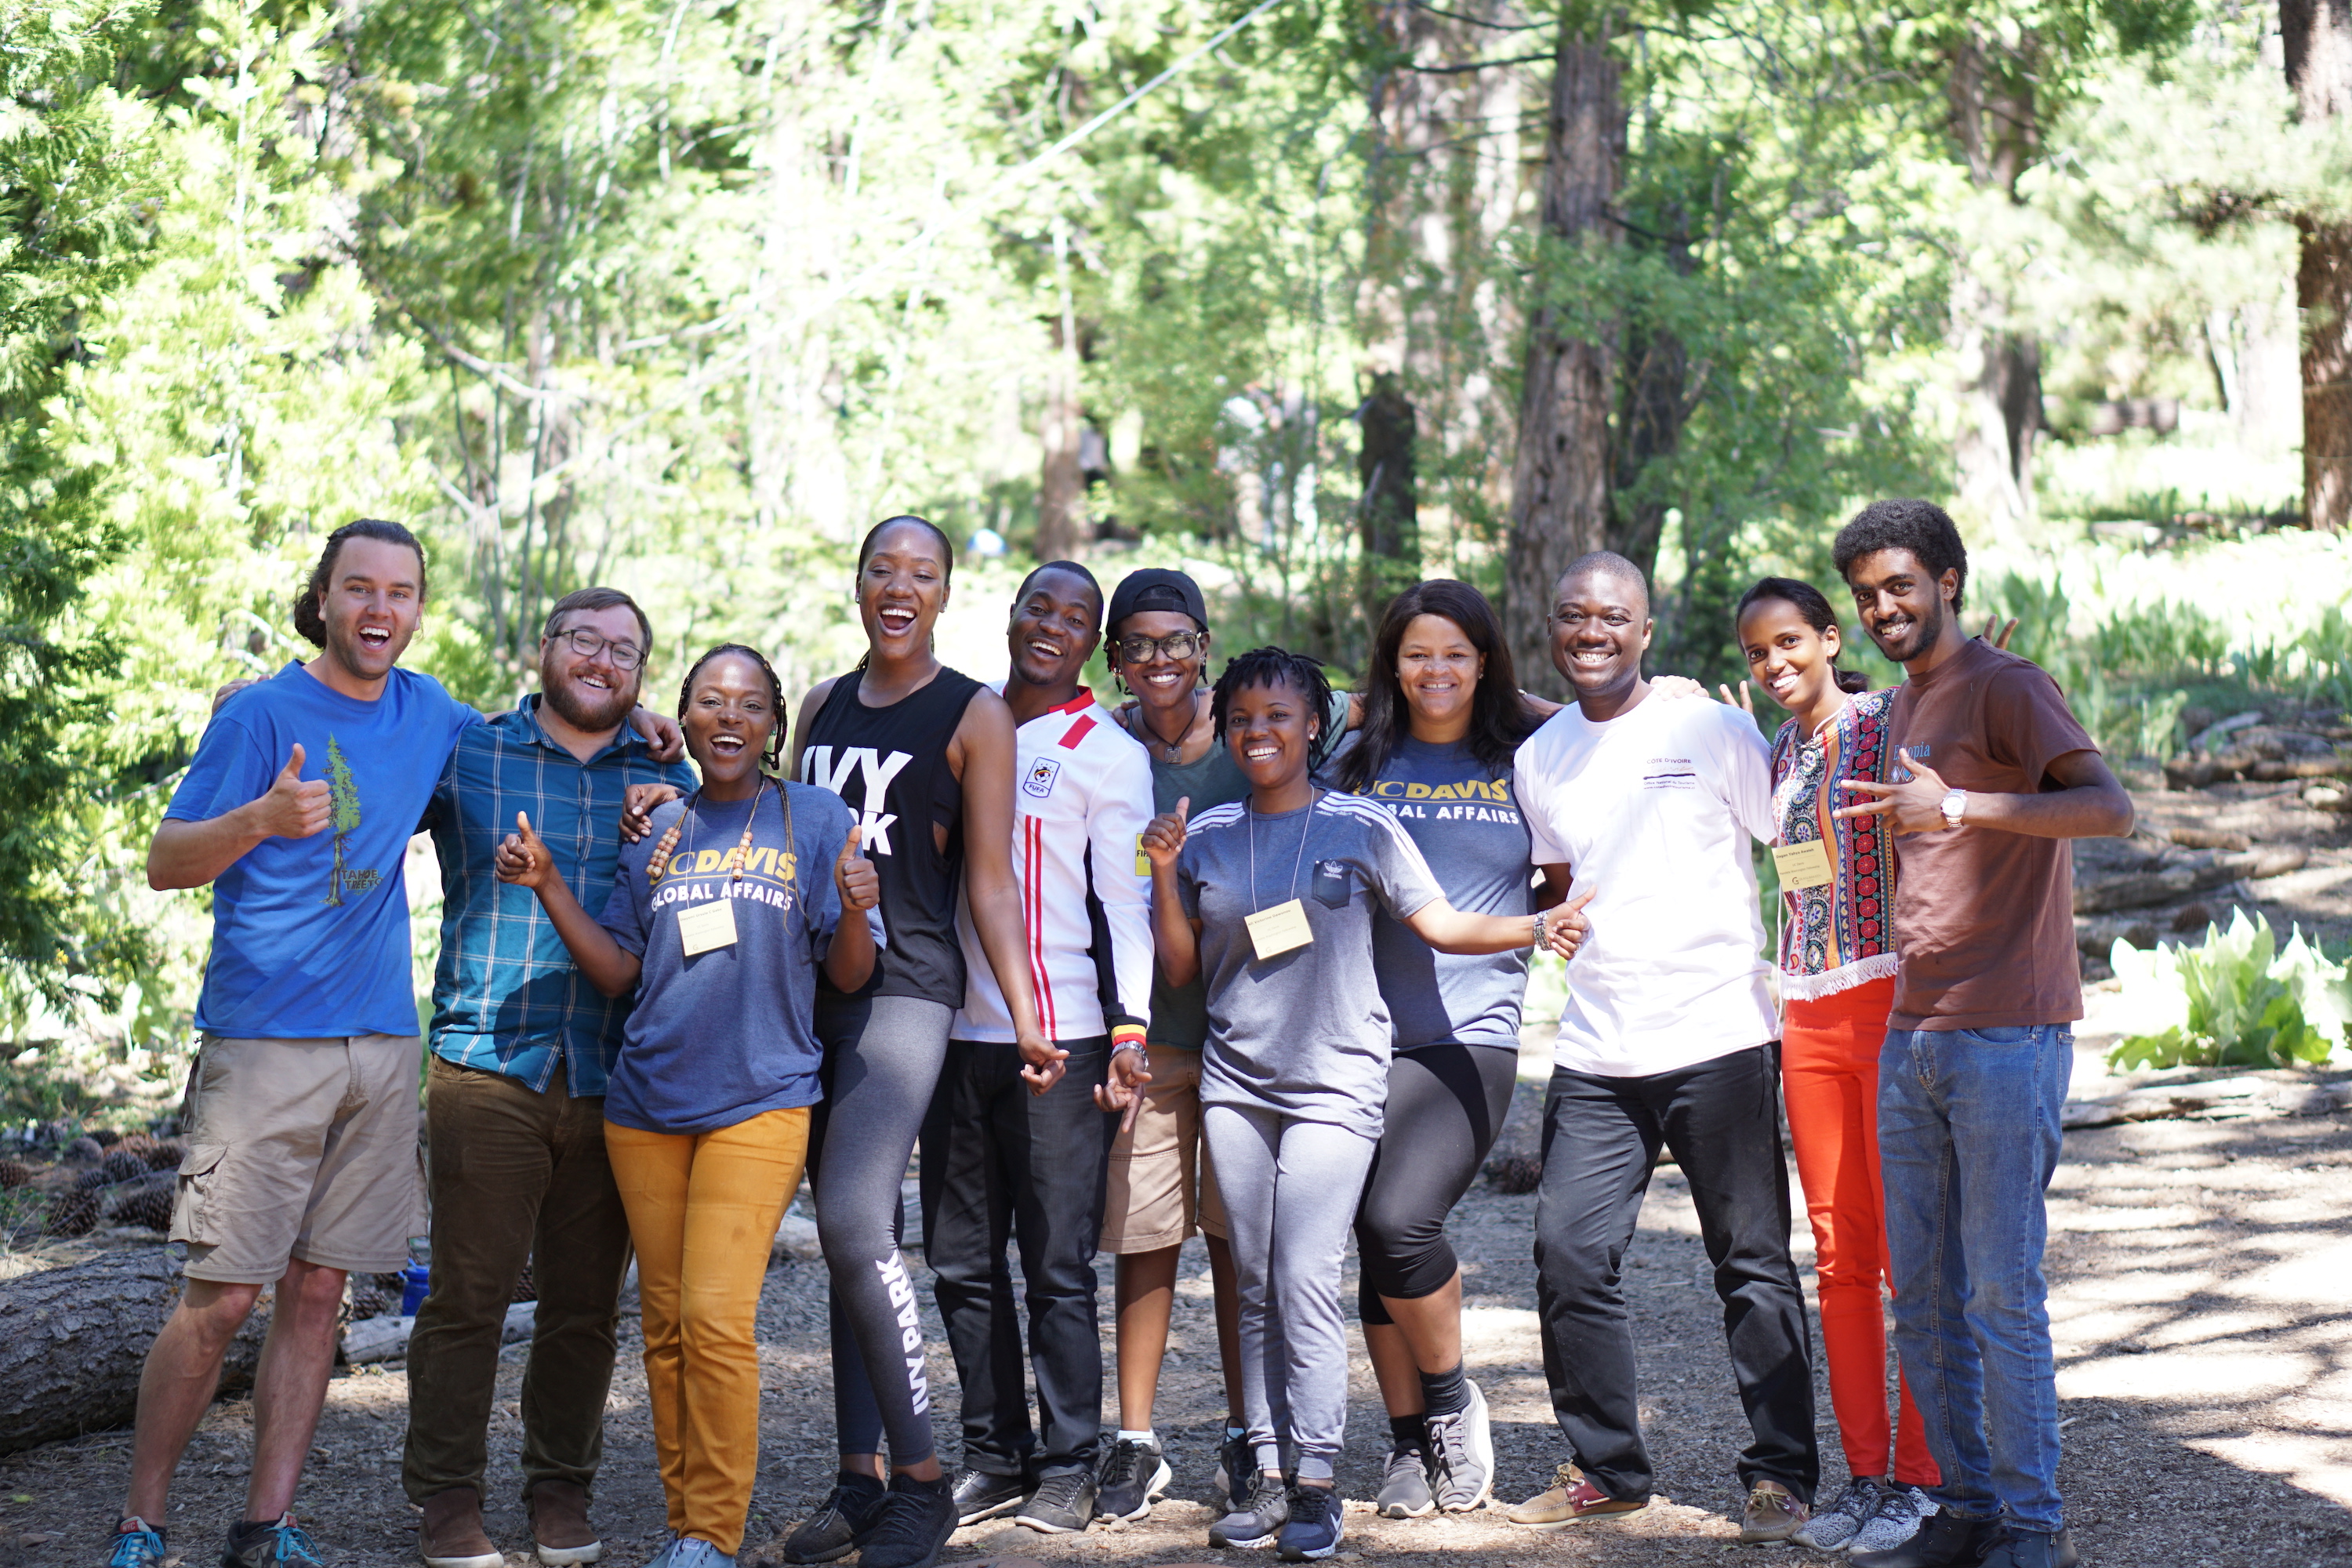 2018 Mandela Fellows at Lake Tahoe for team building